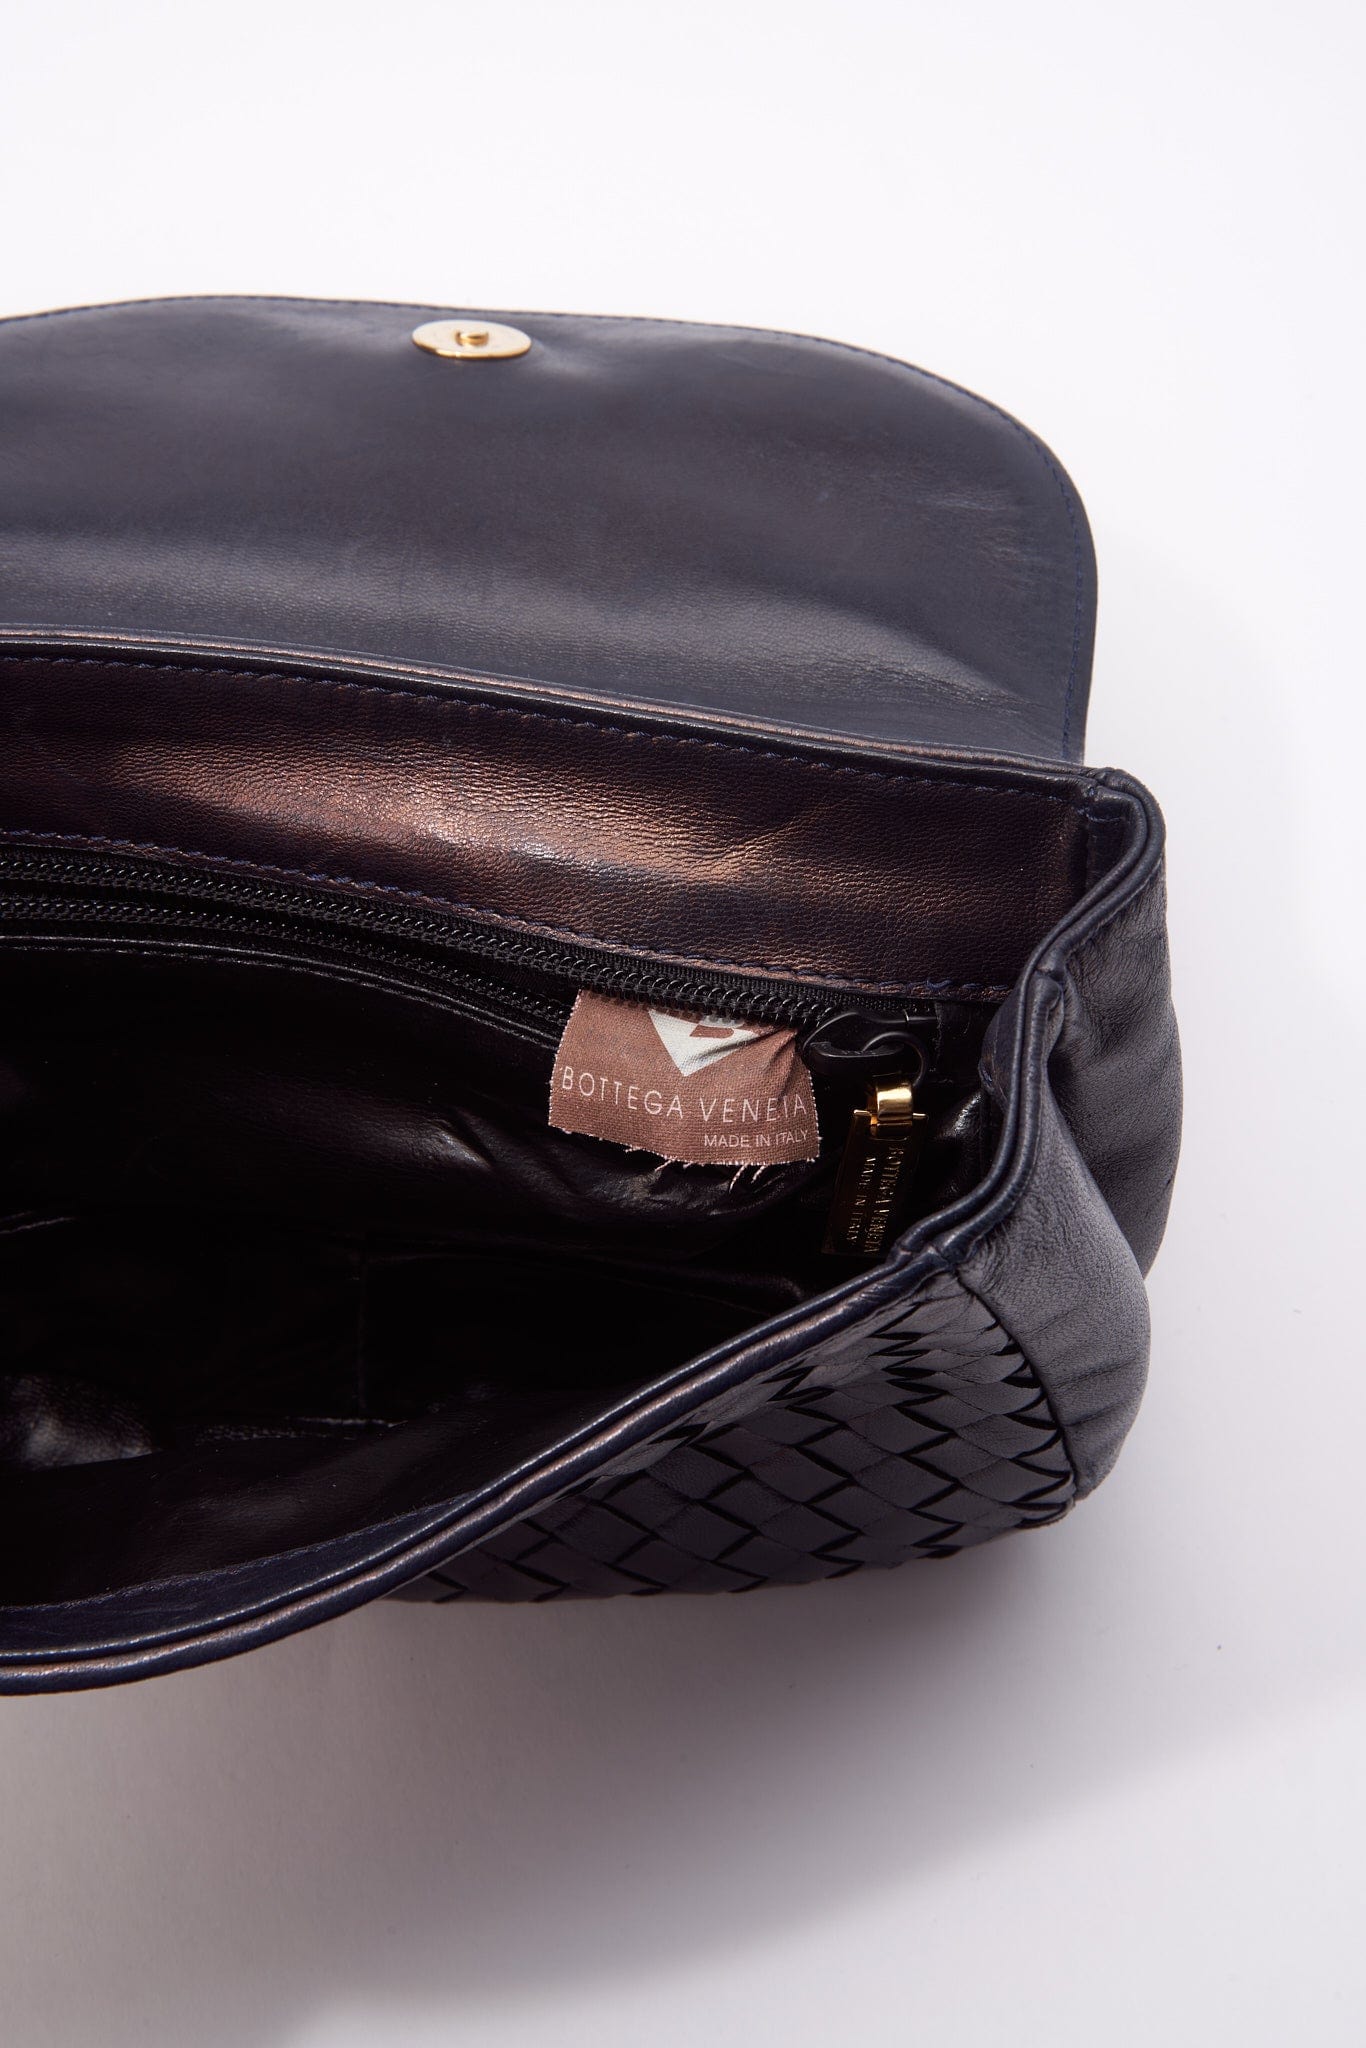 Vintage Bottega Veneta Intrecciato Navy Leather Top Handle Bag